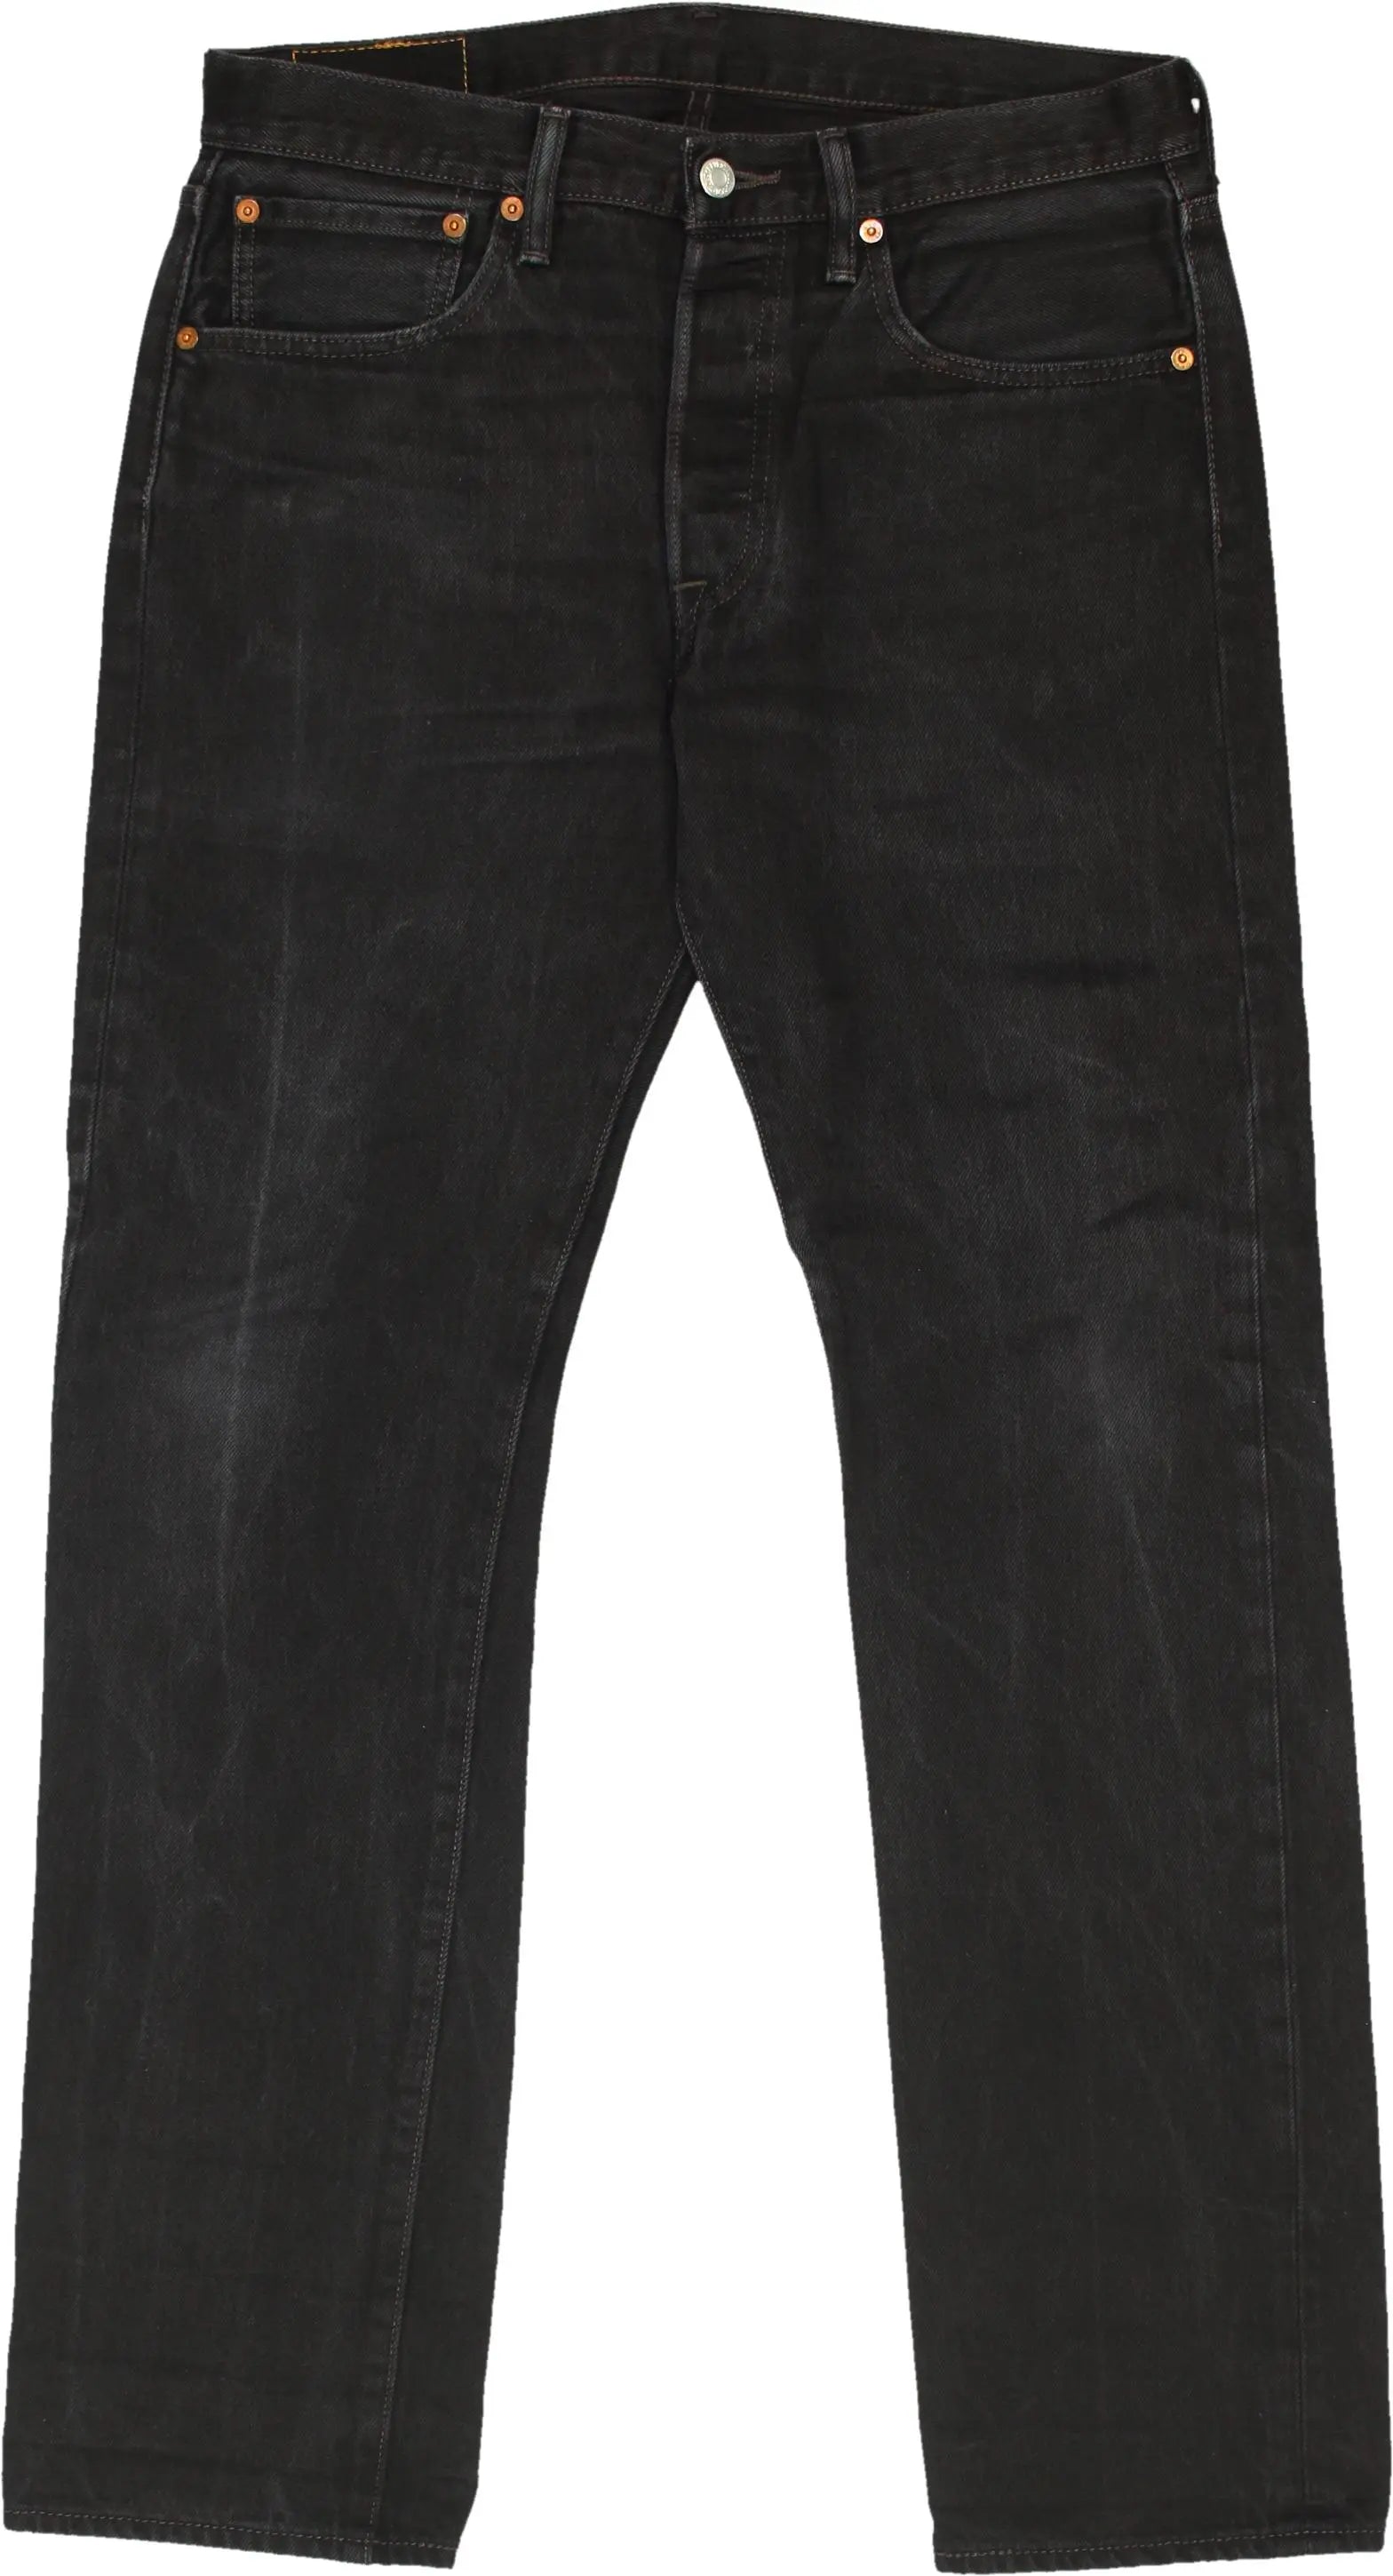 Levi's - Levi's Slim Fit Jeans- ThriftTale.com - Vintage and second handclothing